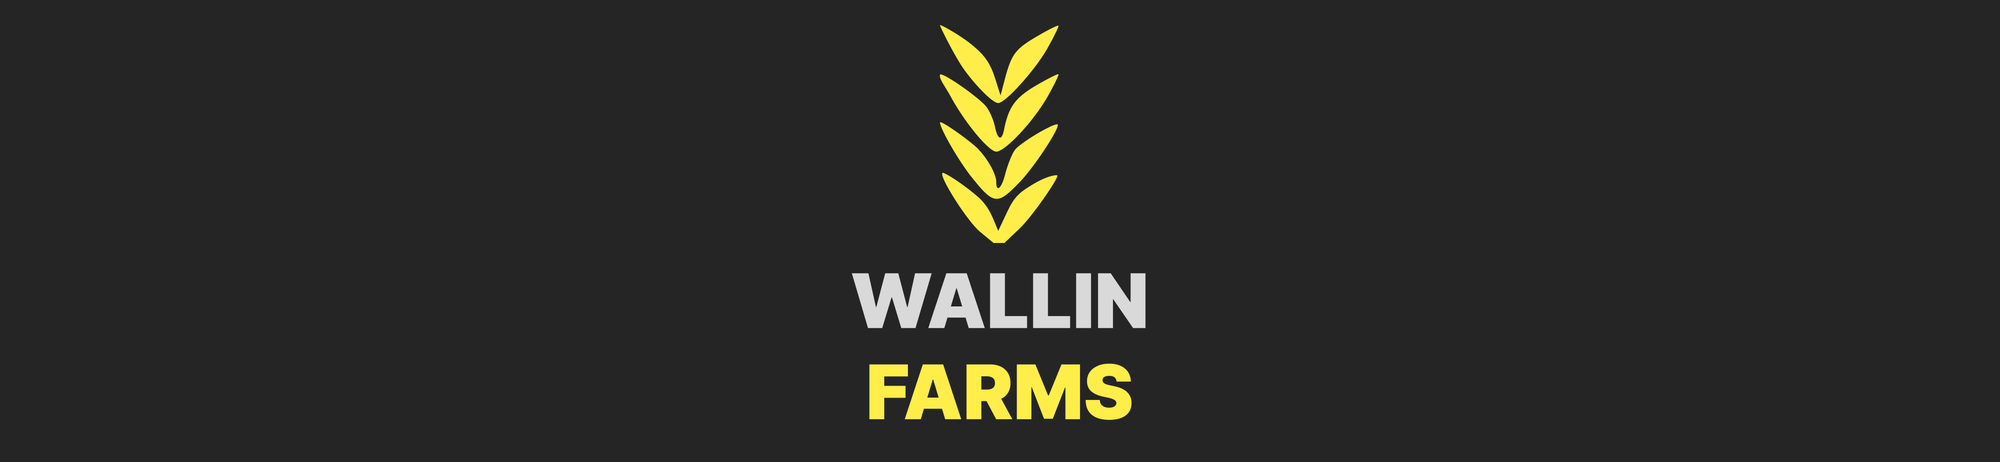 Software Engineer - Wallin Farms